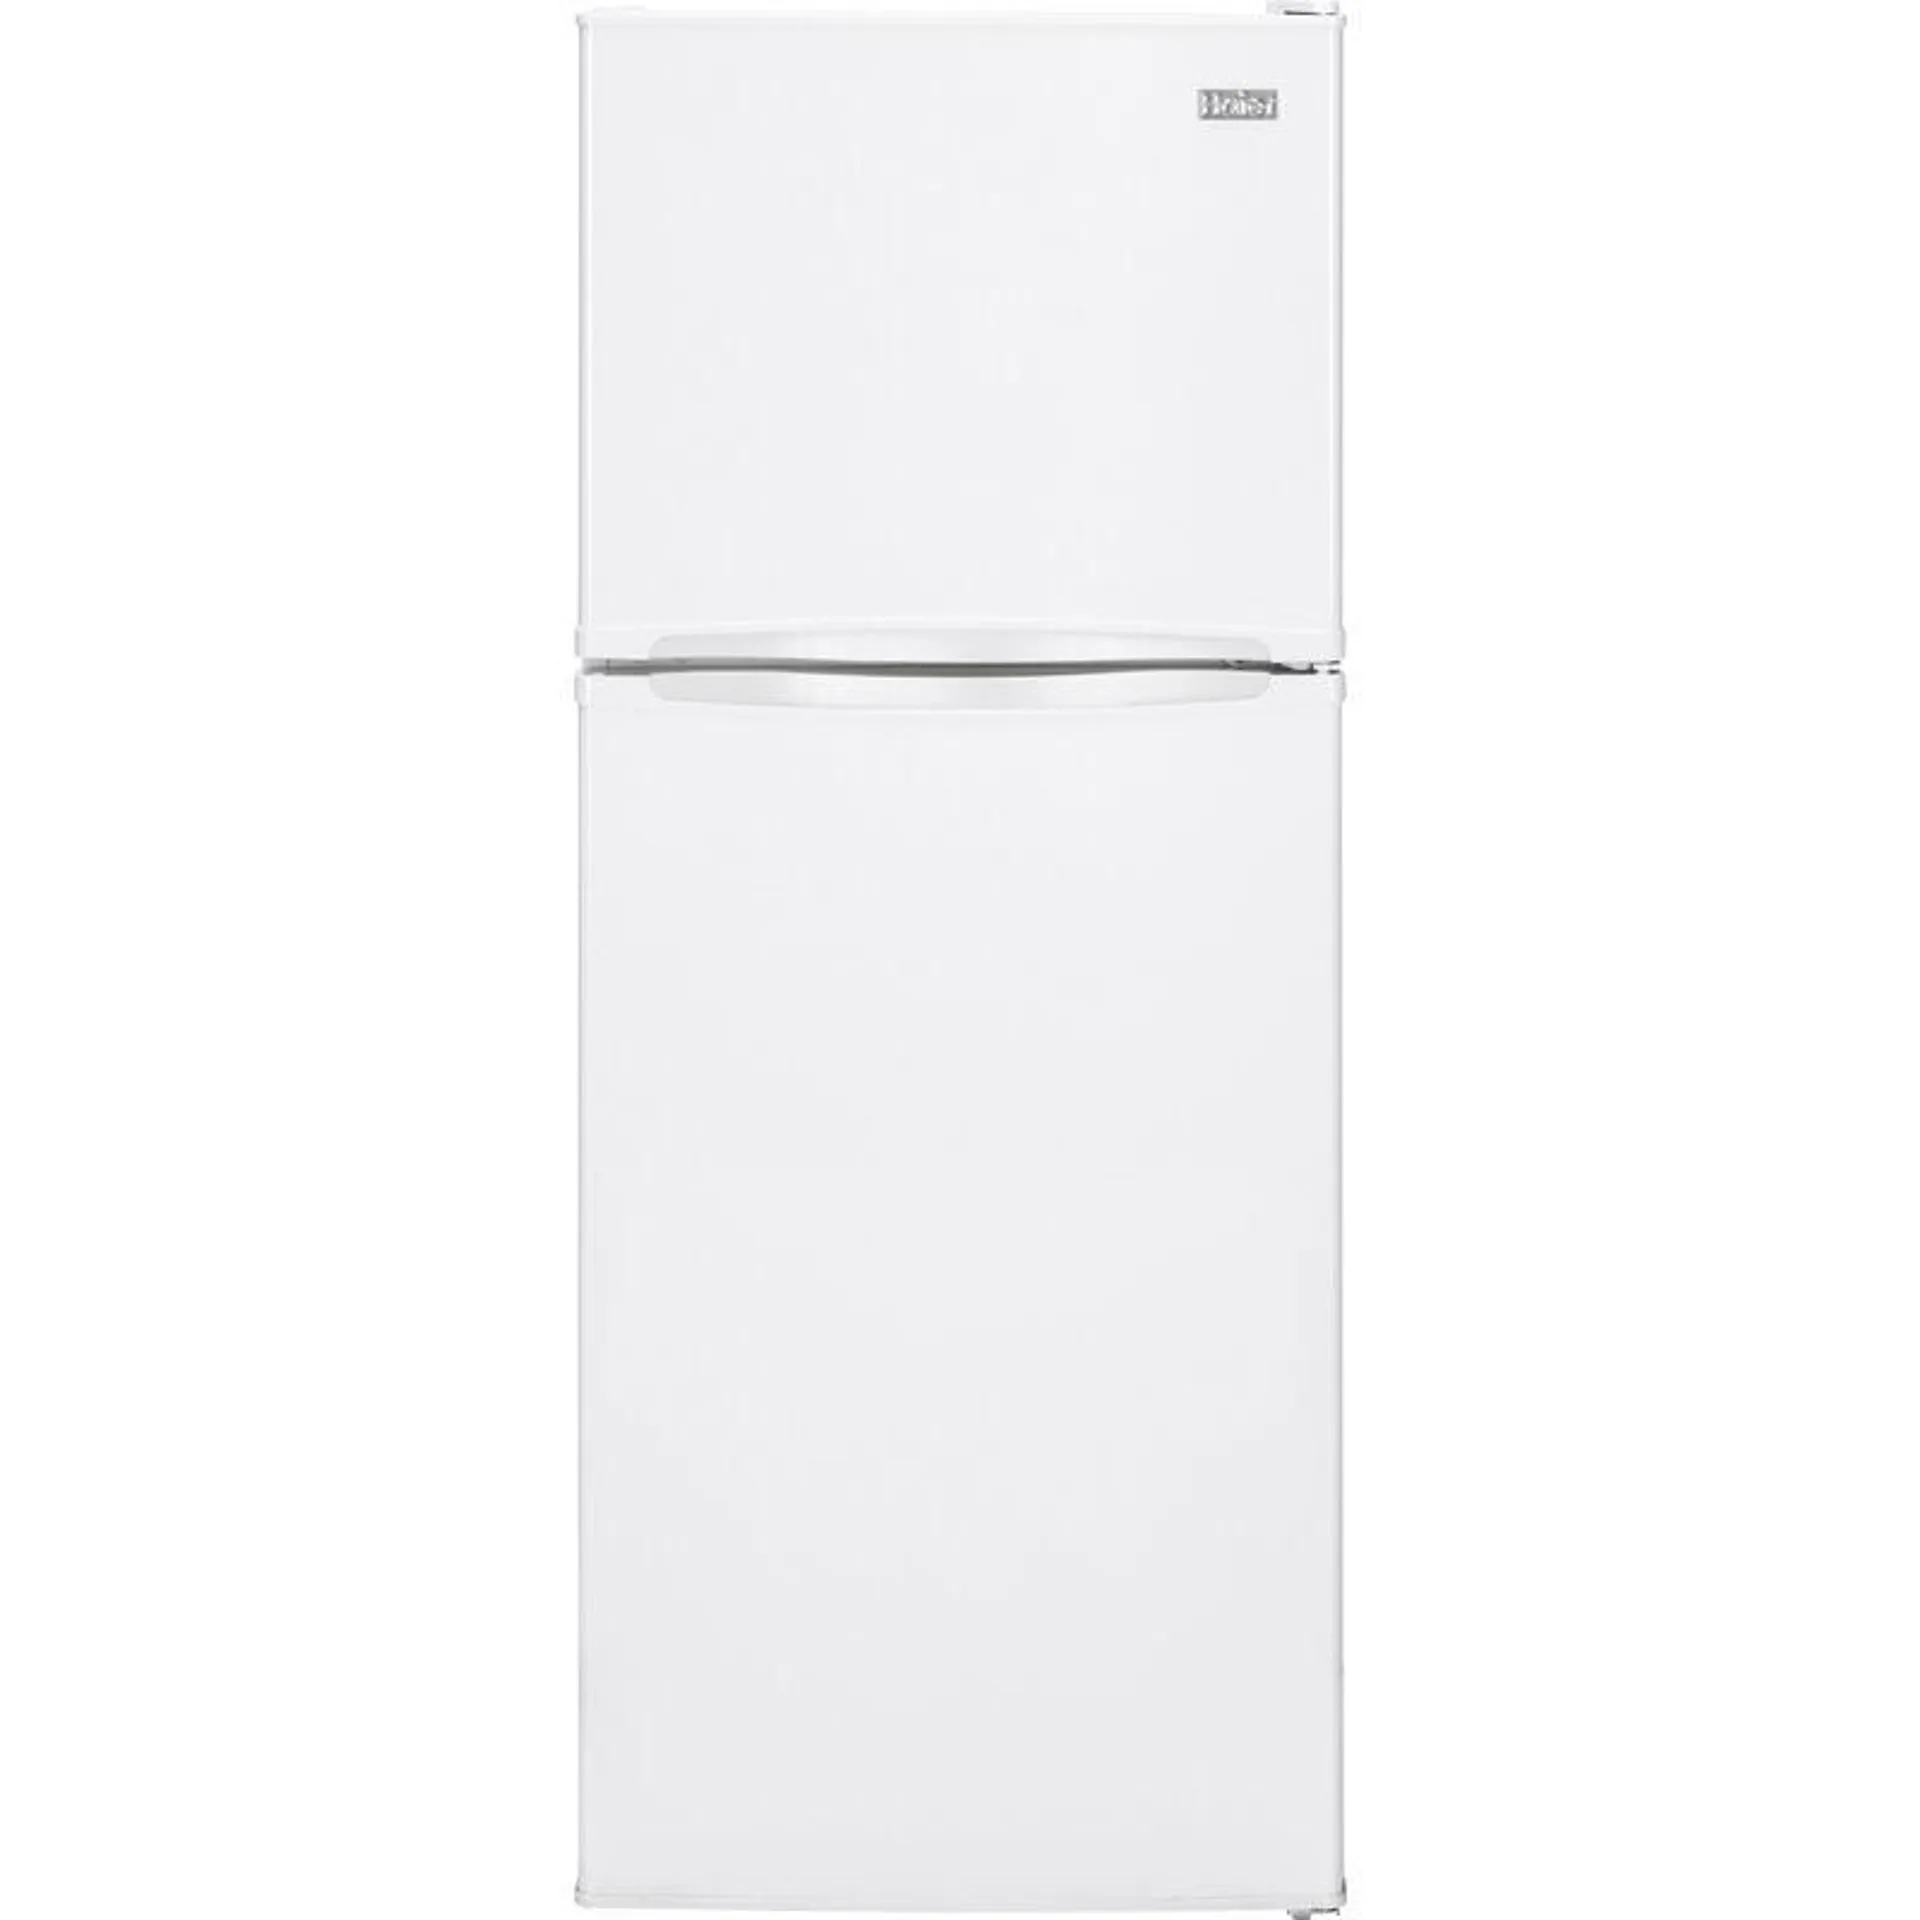 Haier 24 in. 9.8 cu. ft. Counter Depth Top Freezer Refrigerator - White